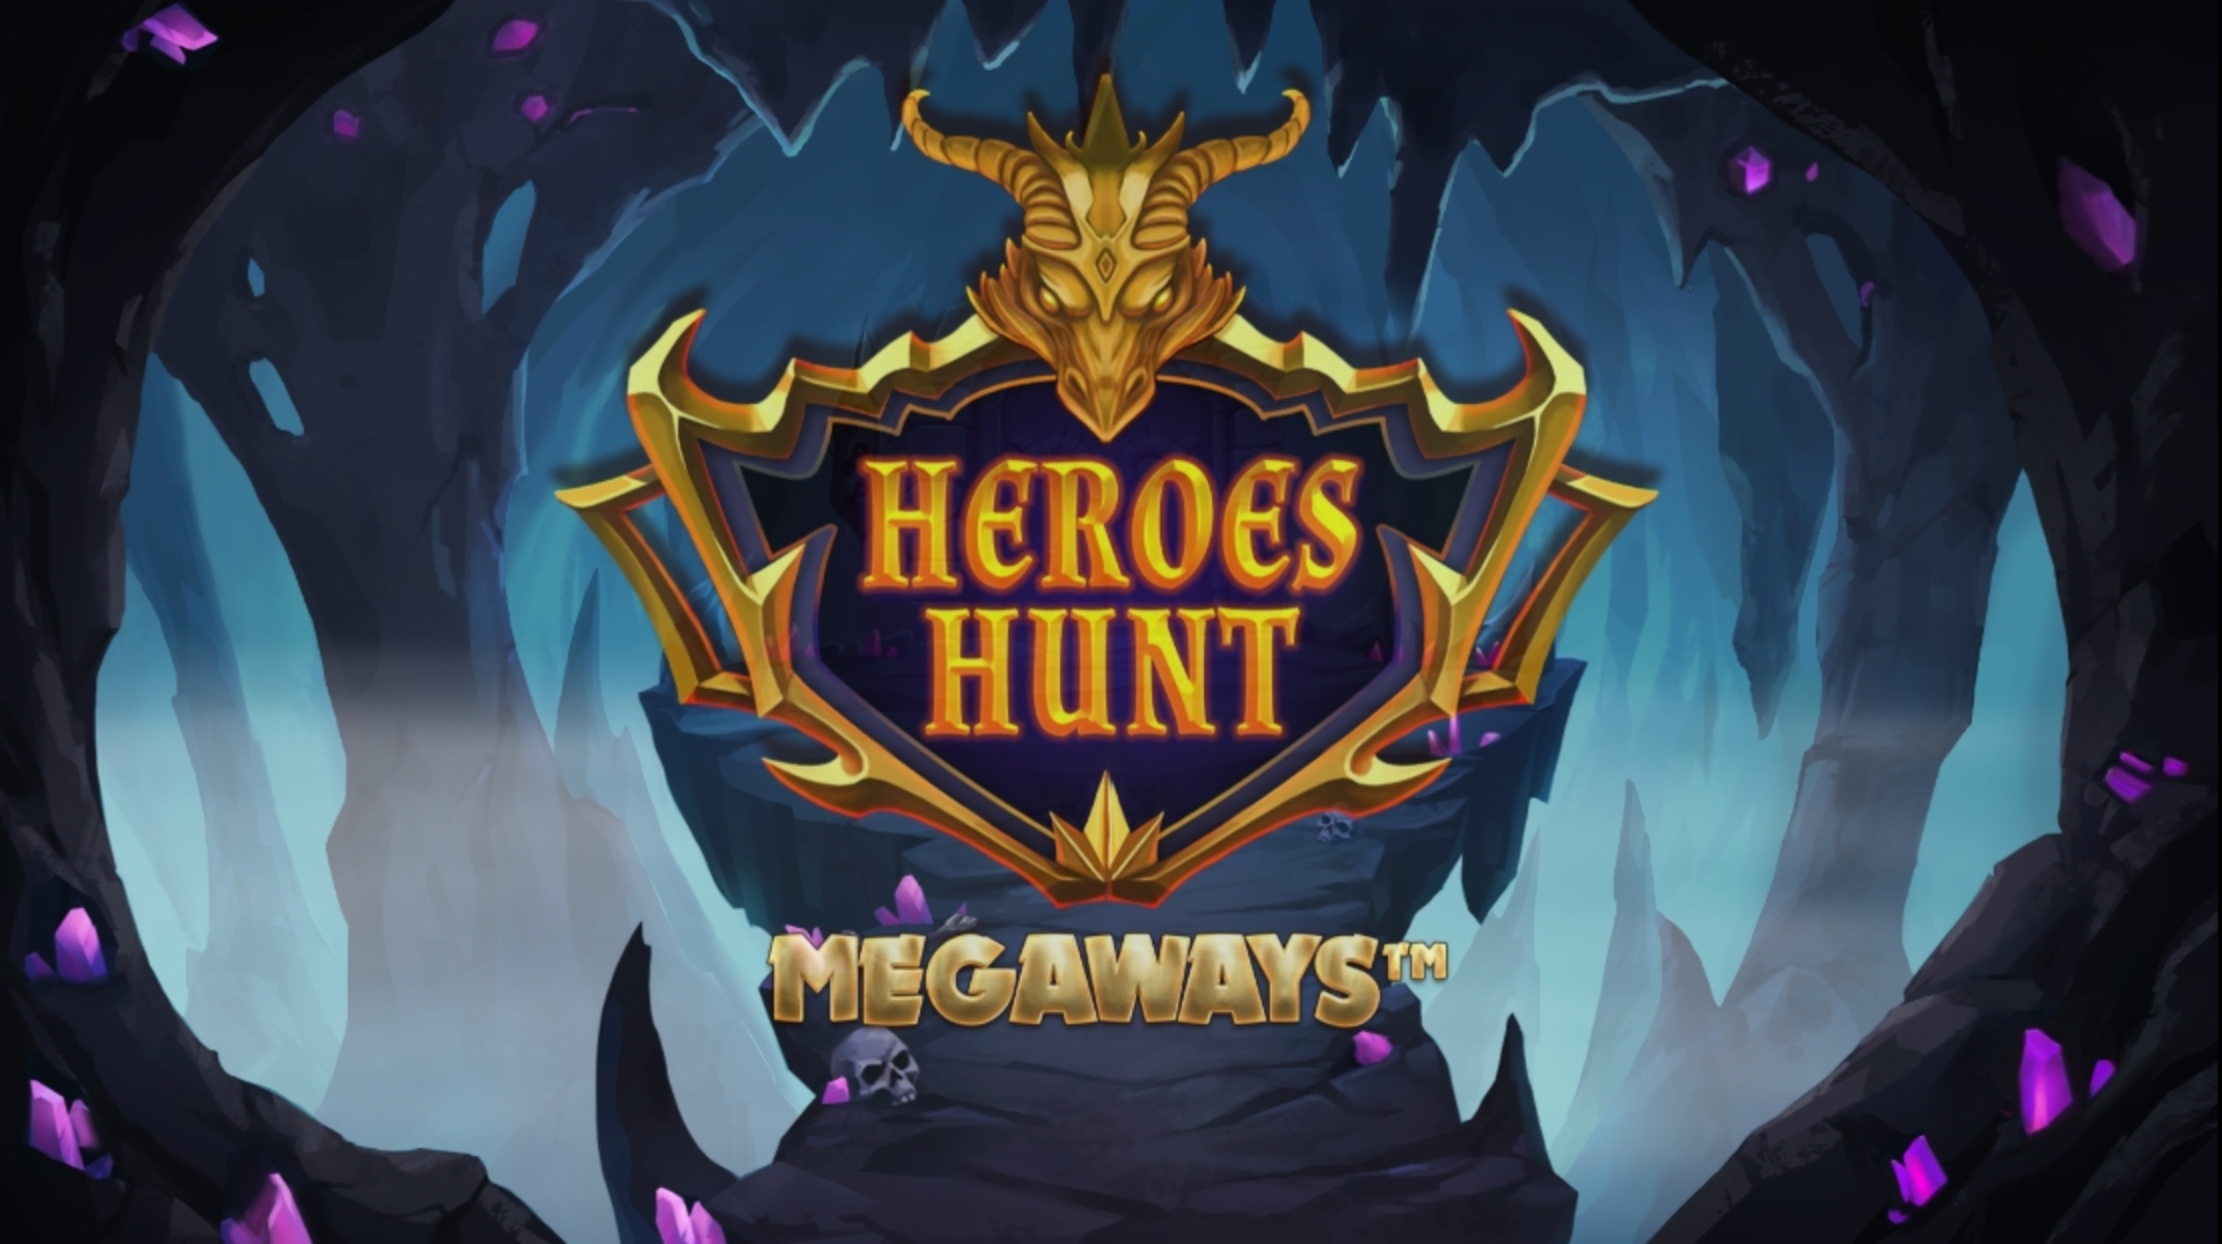 Play Heroes Hunt Megaways Free Casino Slot Game by Fantasma Games